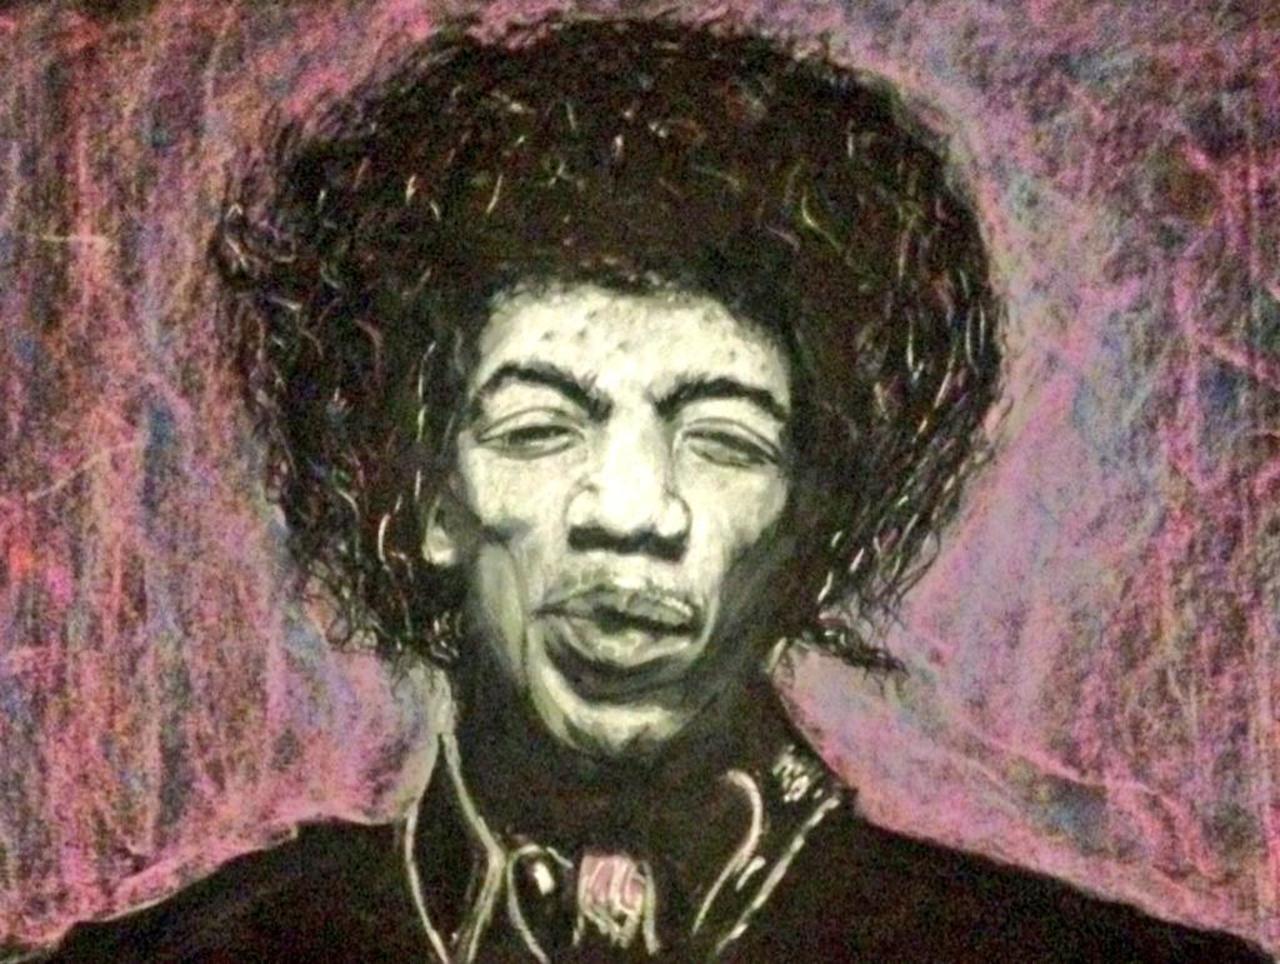 My new #charcoal #pastel  #portrait of  @JimiHendrix #guitar #rocklegend #purplehaze #art @Artulove @BigArtBoost  http://t.co/Lw16wlwt9e